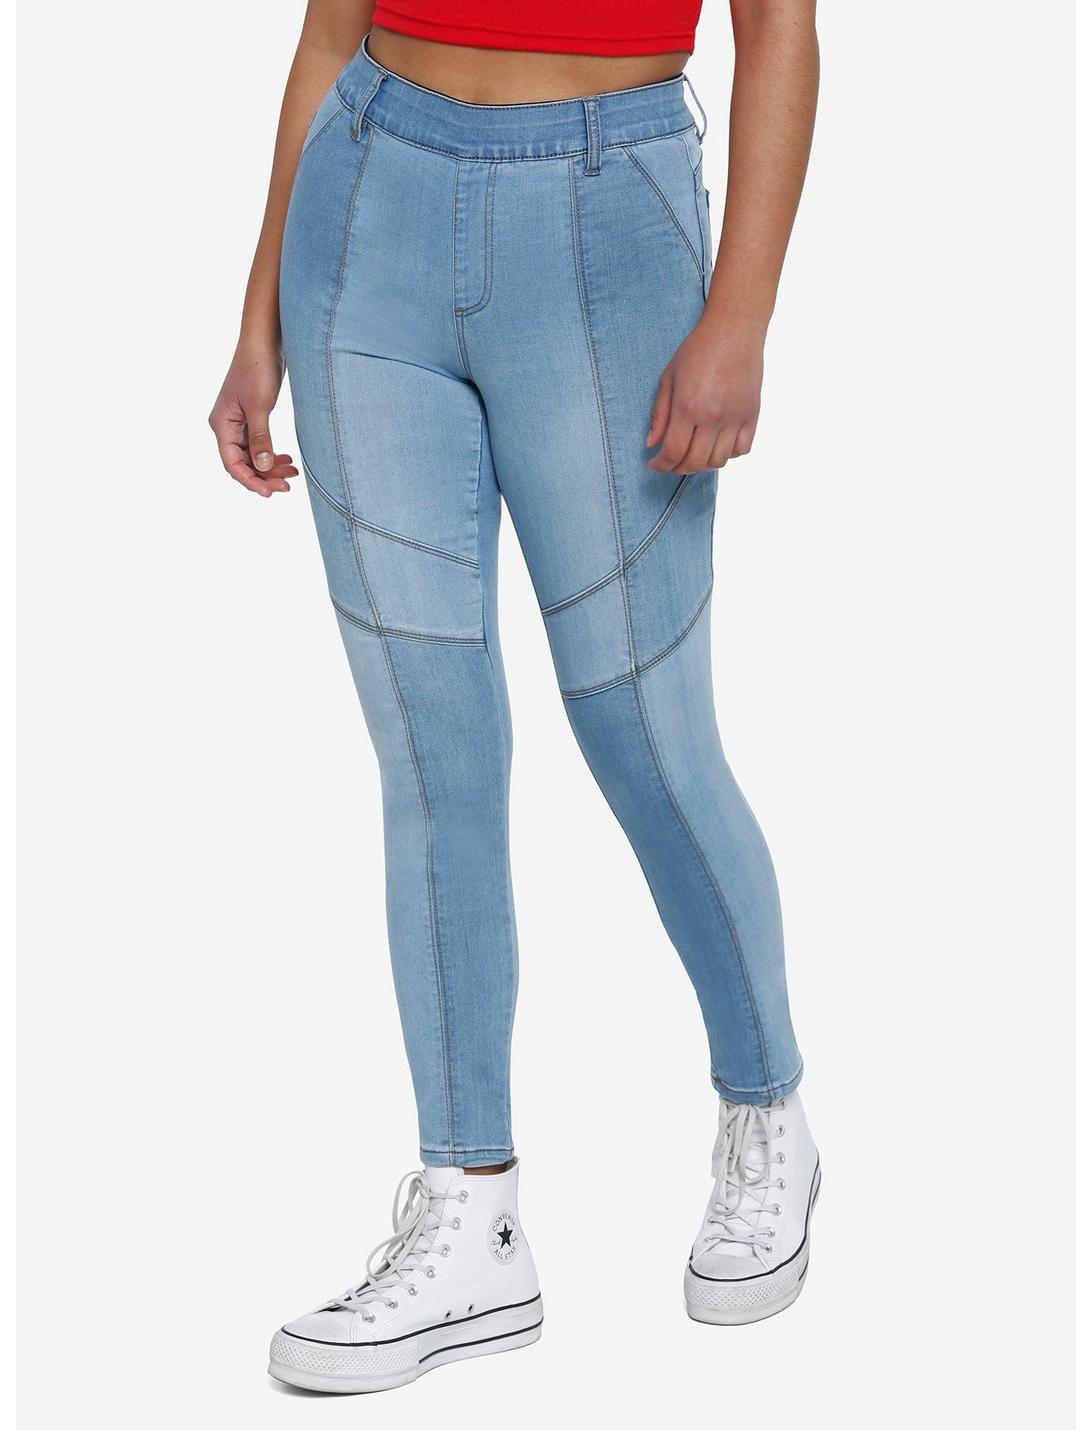 Blue Denim Patchwork Skinny Jeans Plus Size, GREY, hi-res